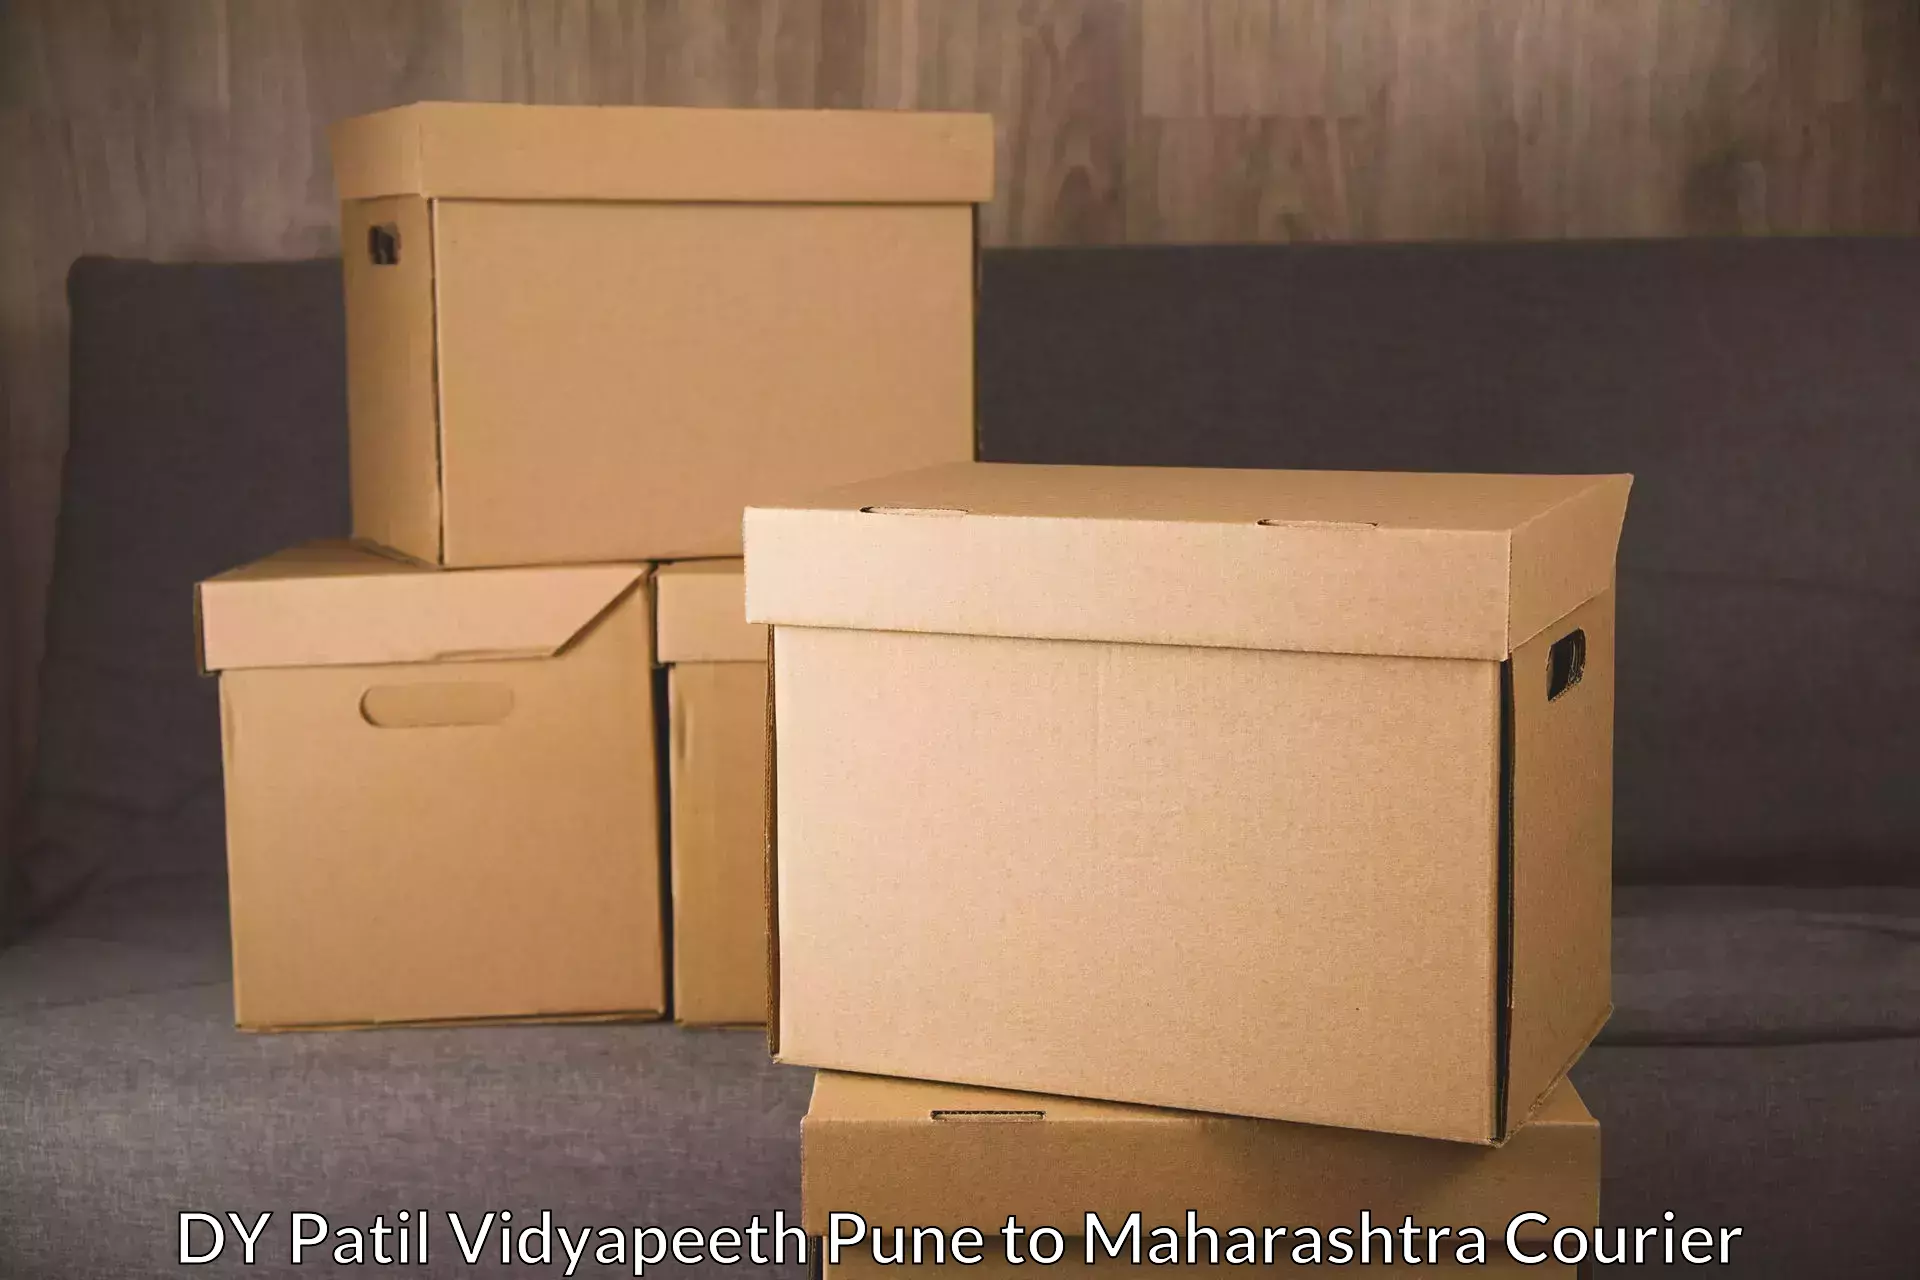 Efficient parcel service DY Patil Vidyapeeth Pune to Maharashtra